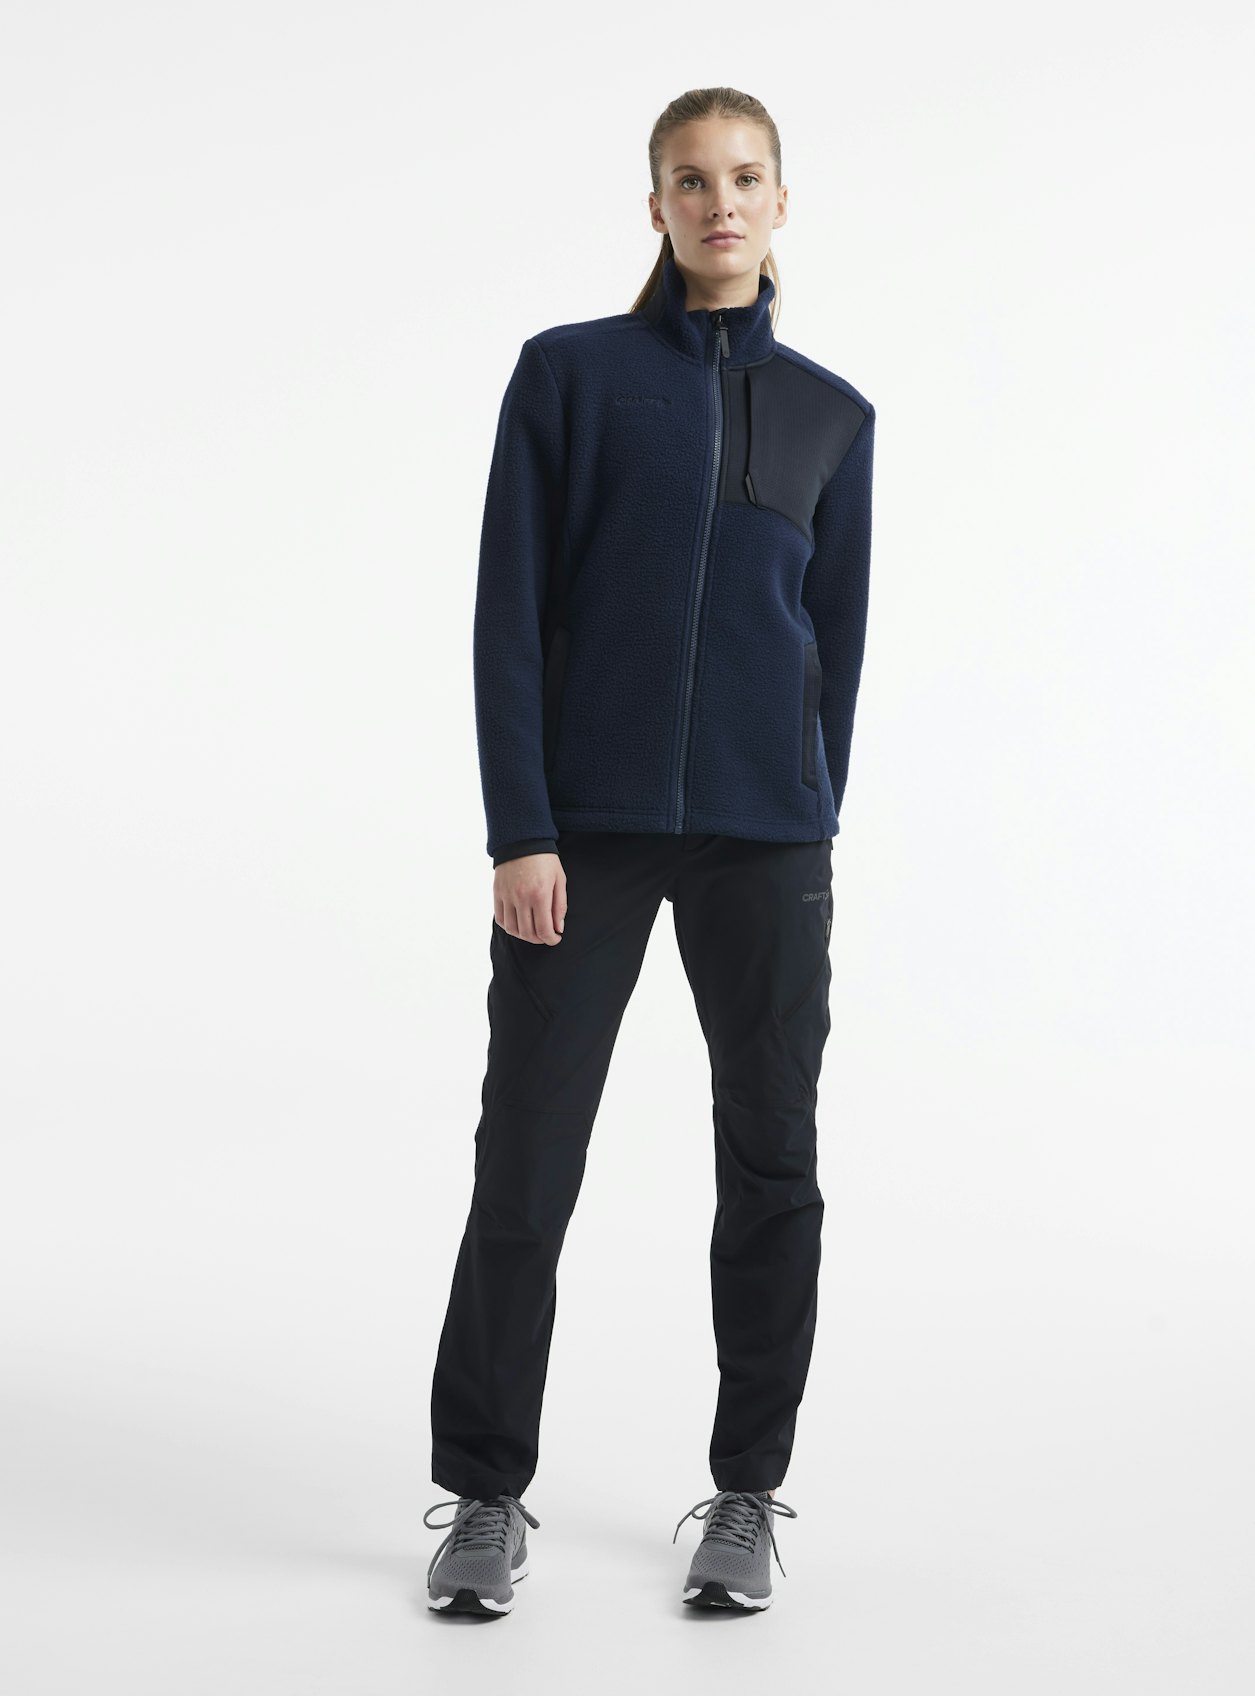 ADV Explore Jacket | Navy Craft Fleece blue W Pile - Sportswear